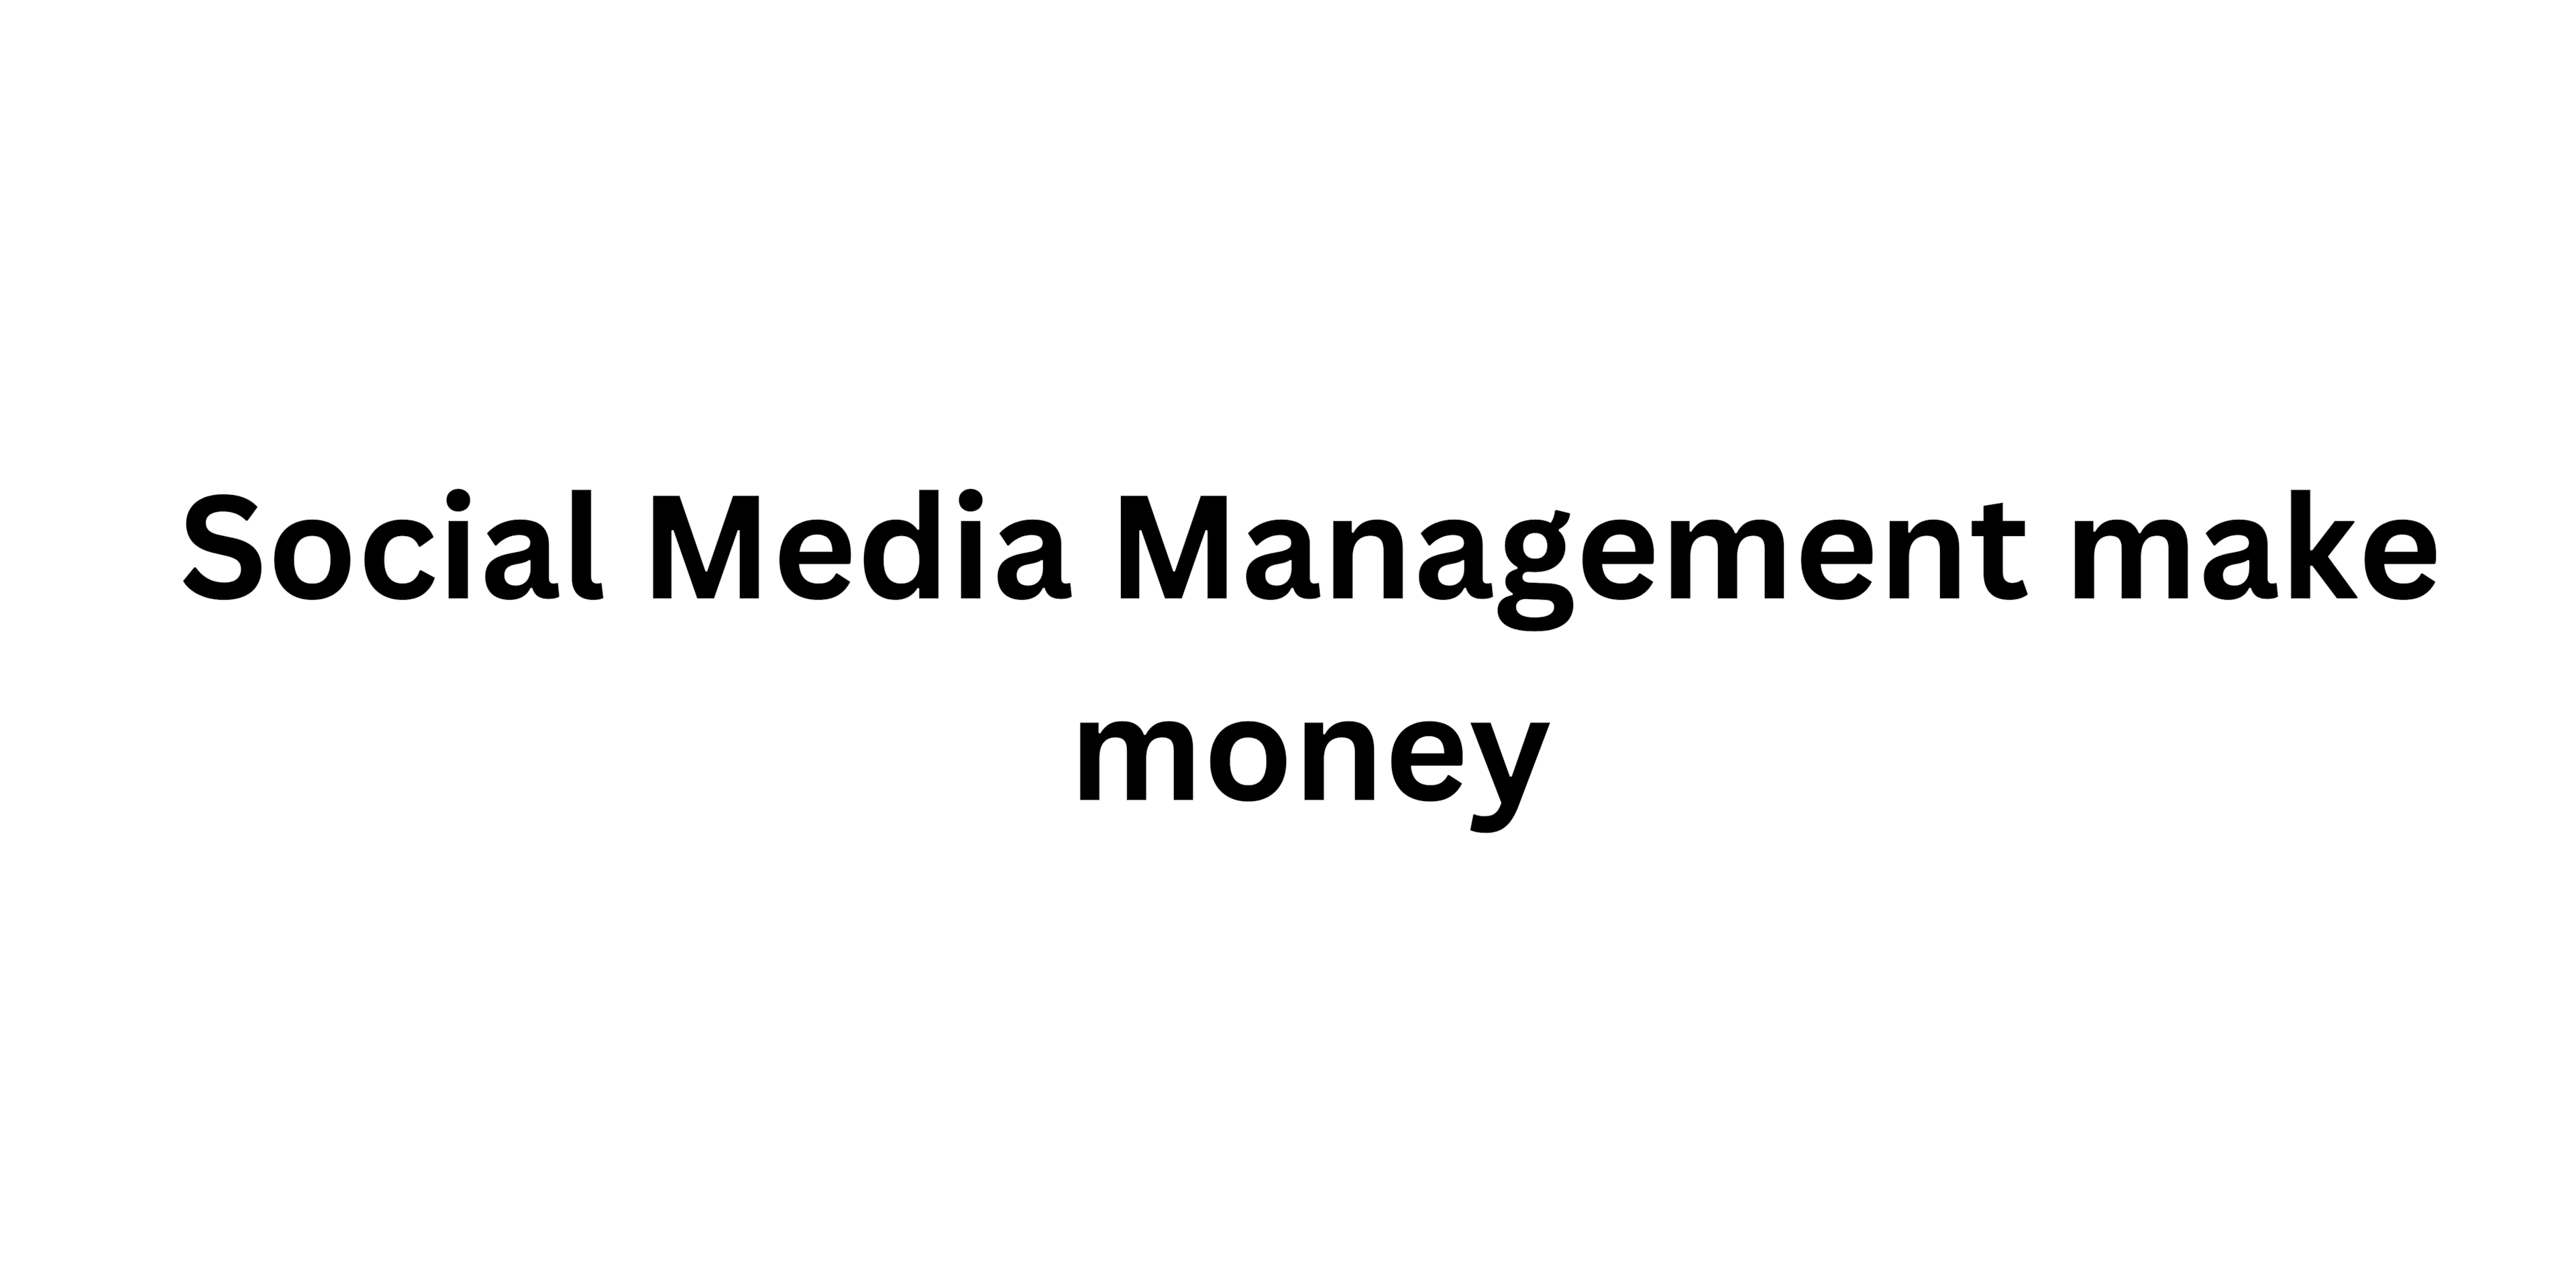 Social Media Management make money